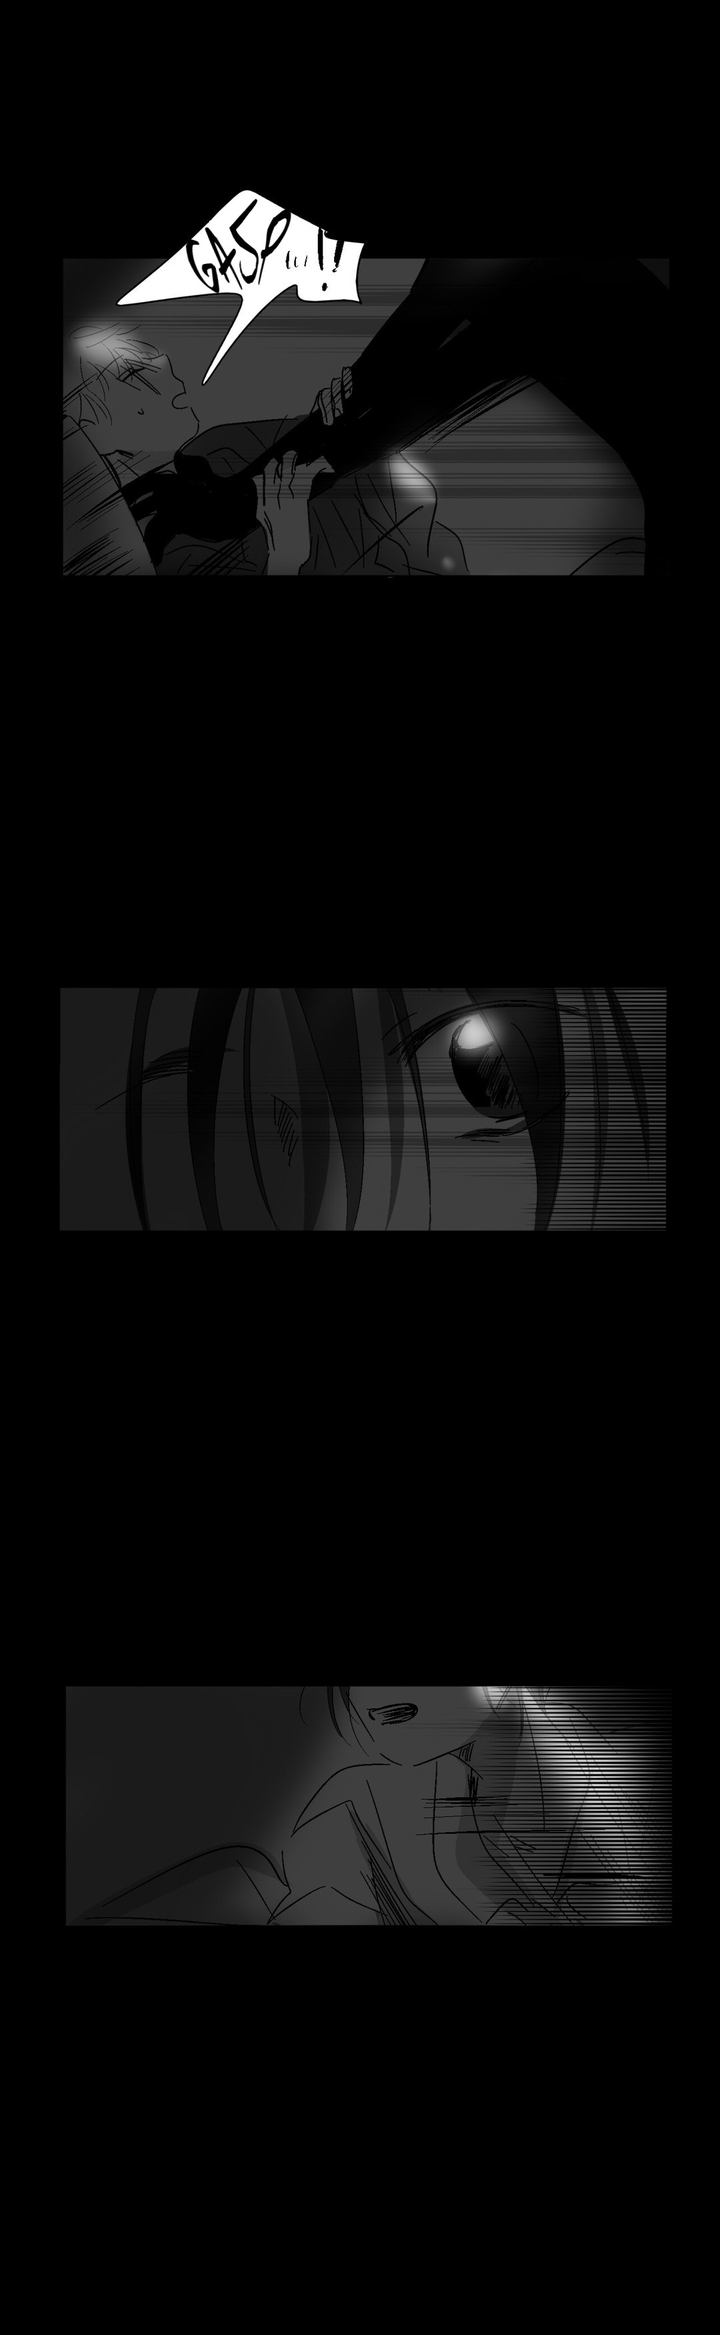 The Eyes Of Sora 32 26